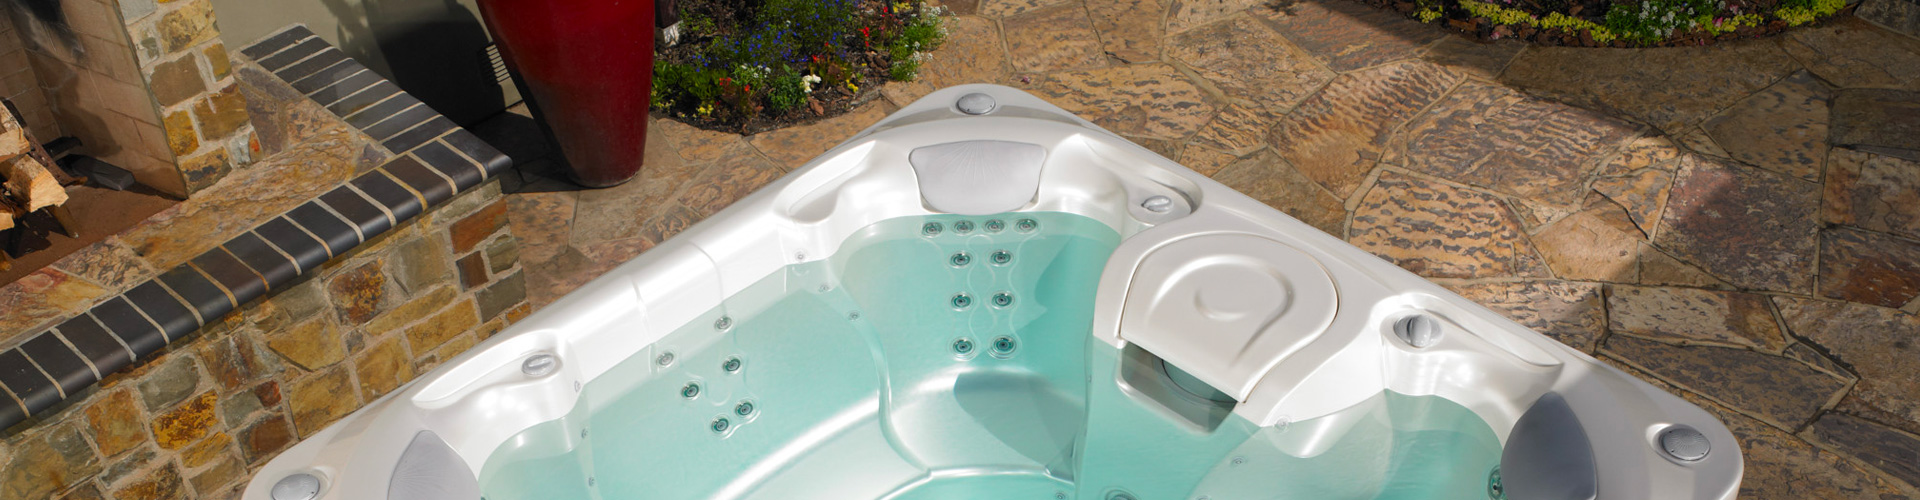 Request Pricing for Hot Tubs, Swim Spas, & Saunas